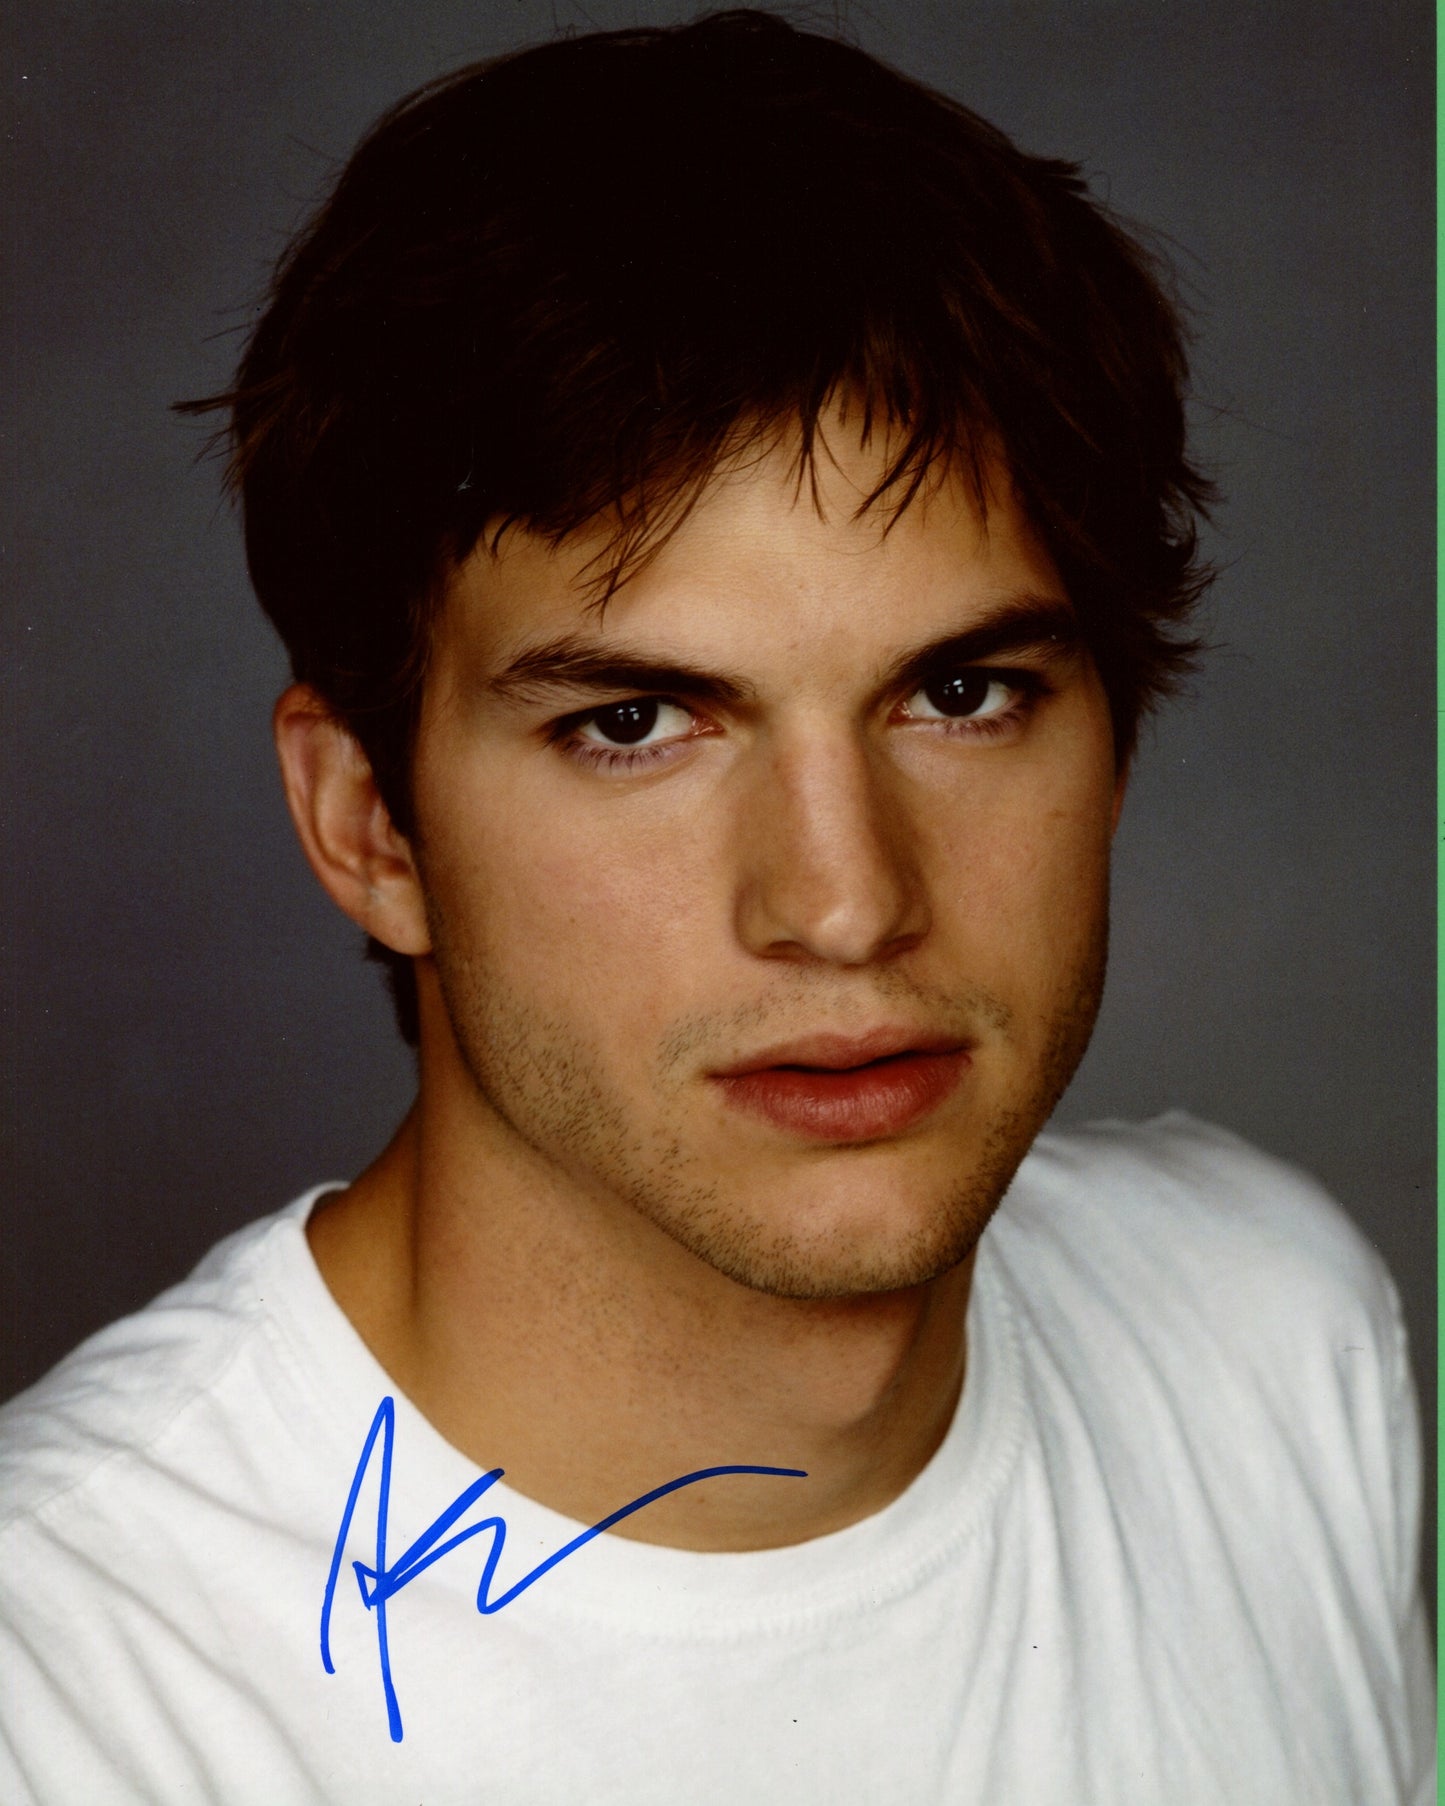 Ashton Kutcher Signed 8x10 Photo - Video Proof